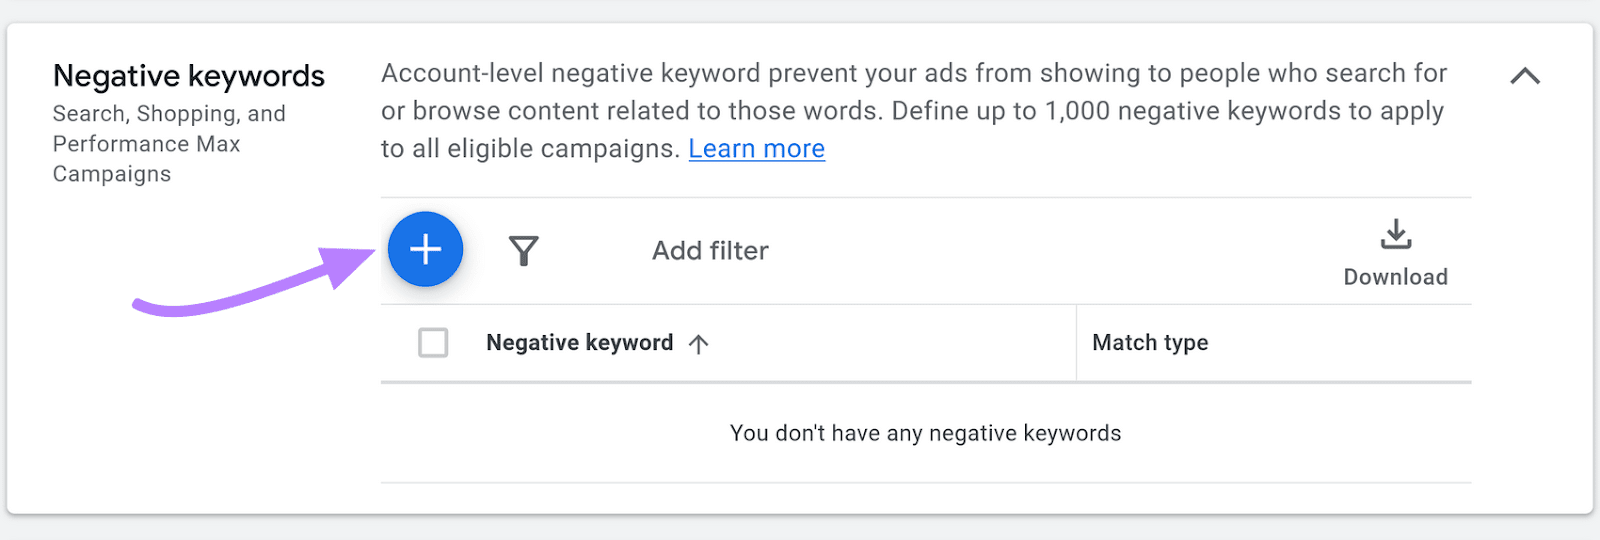 “Negative keywords" section in Google Ads